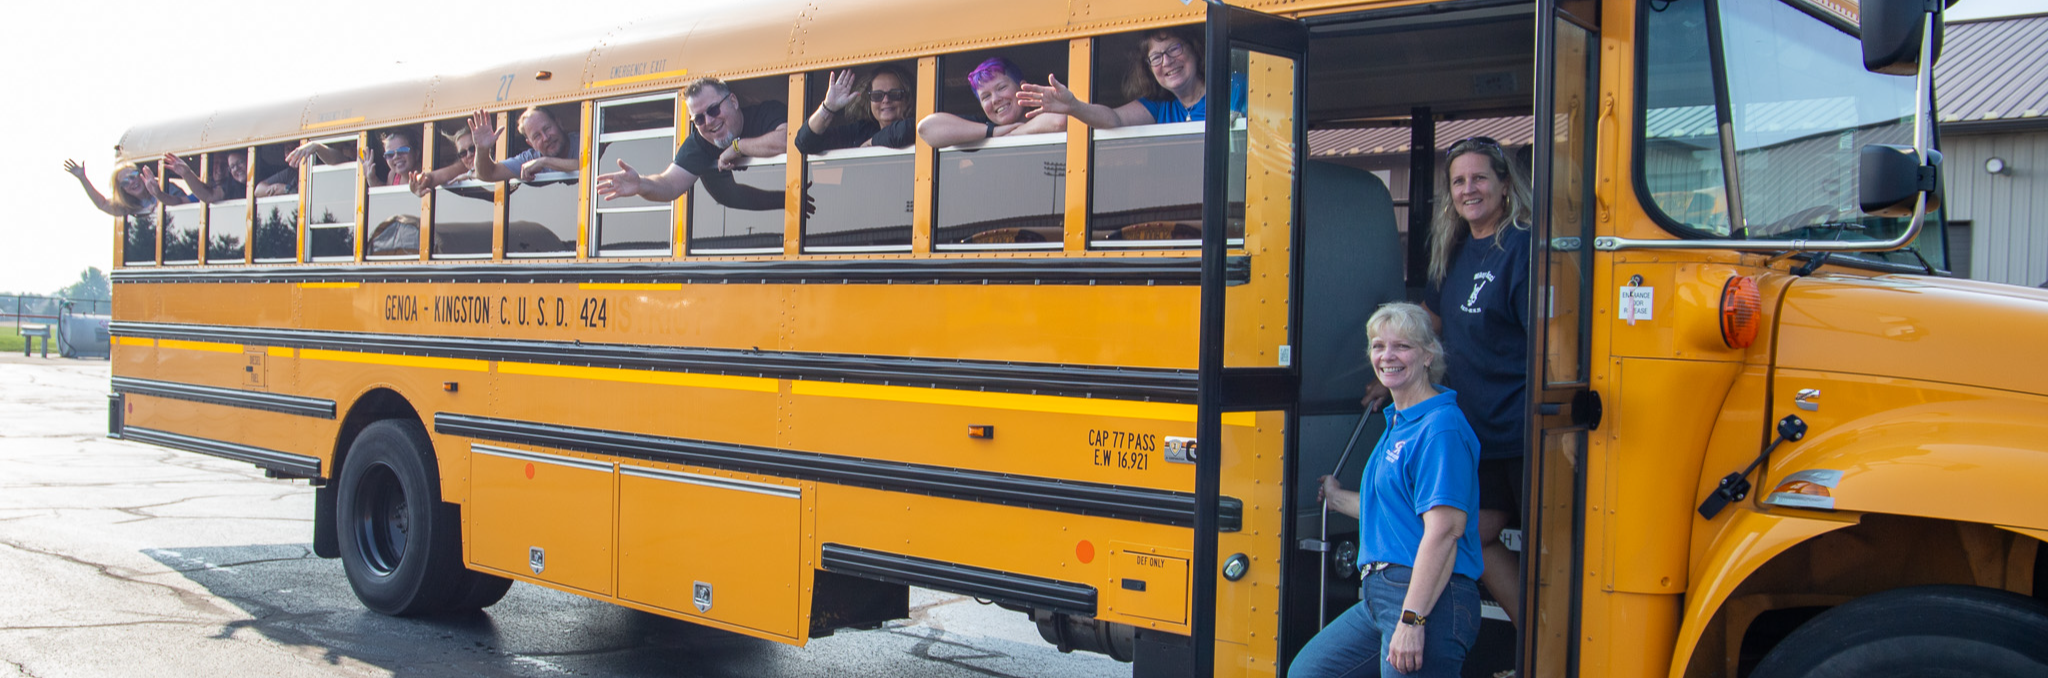 image of transportation staff waving at camera from bus